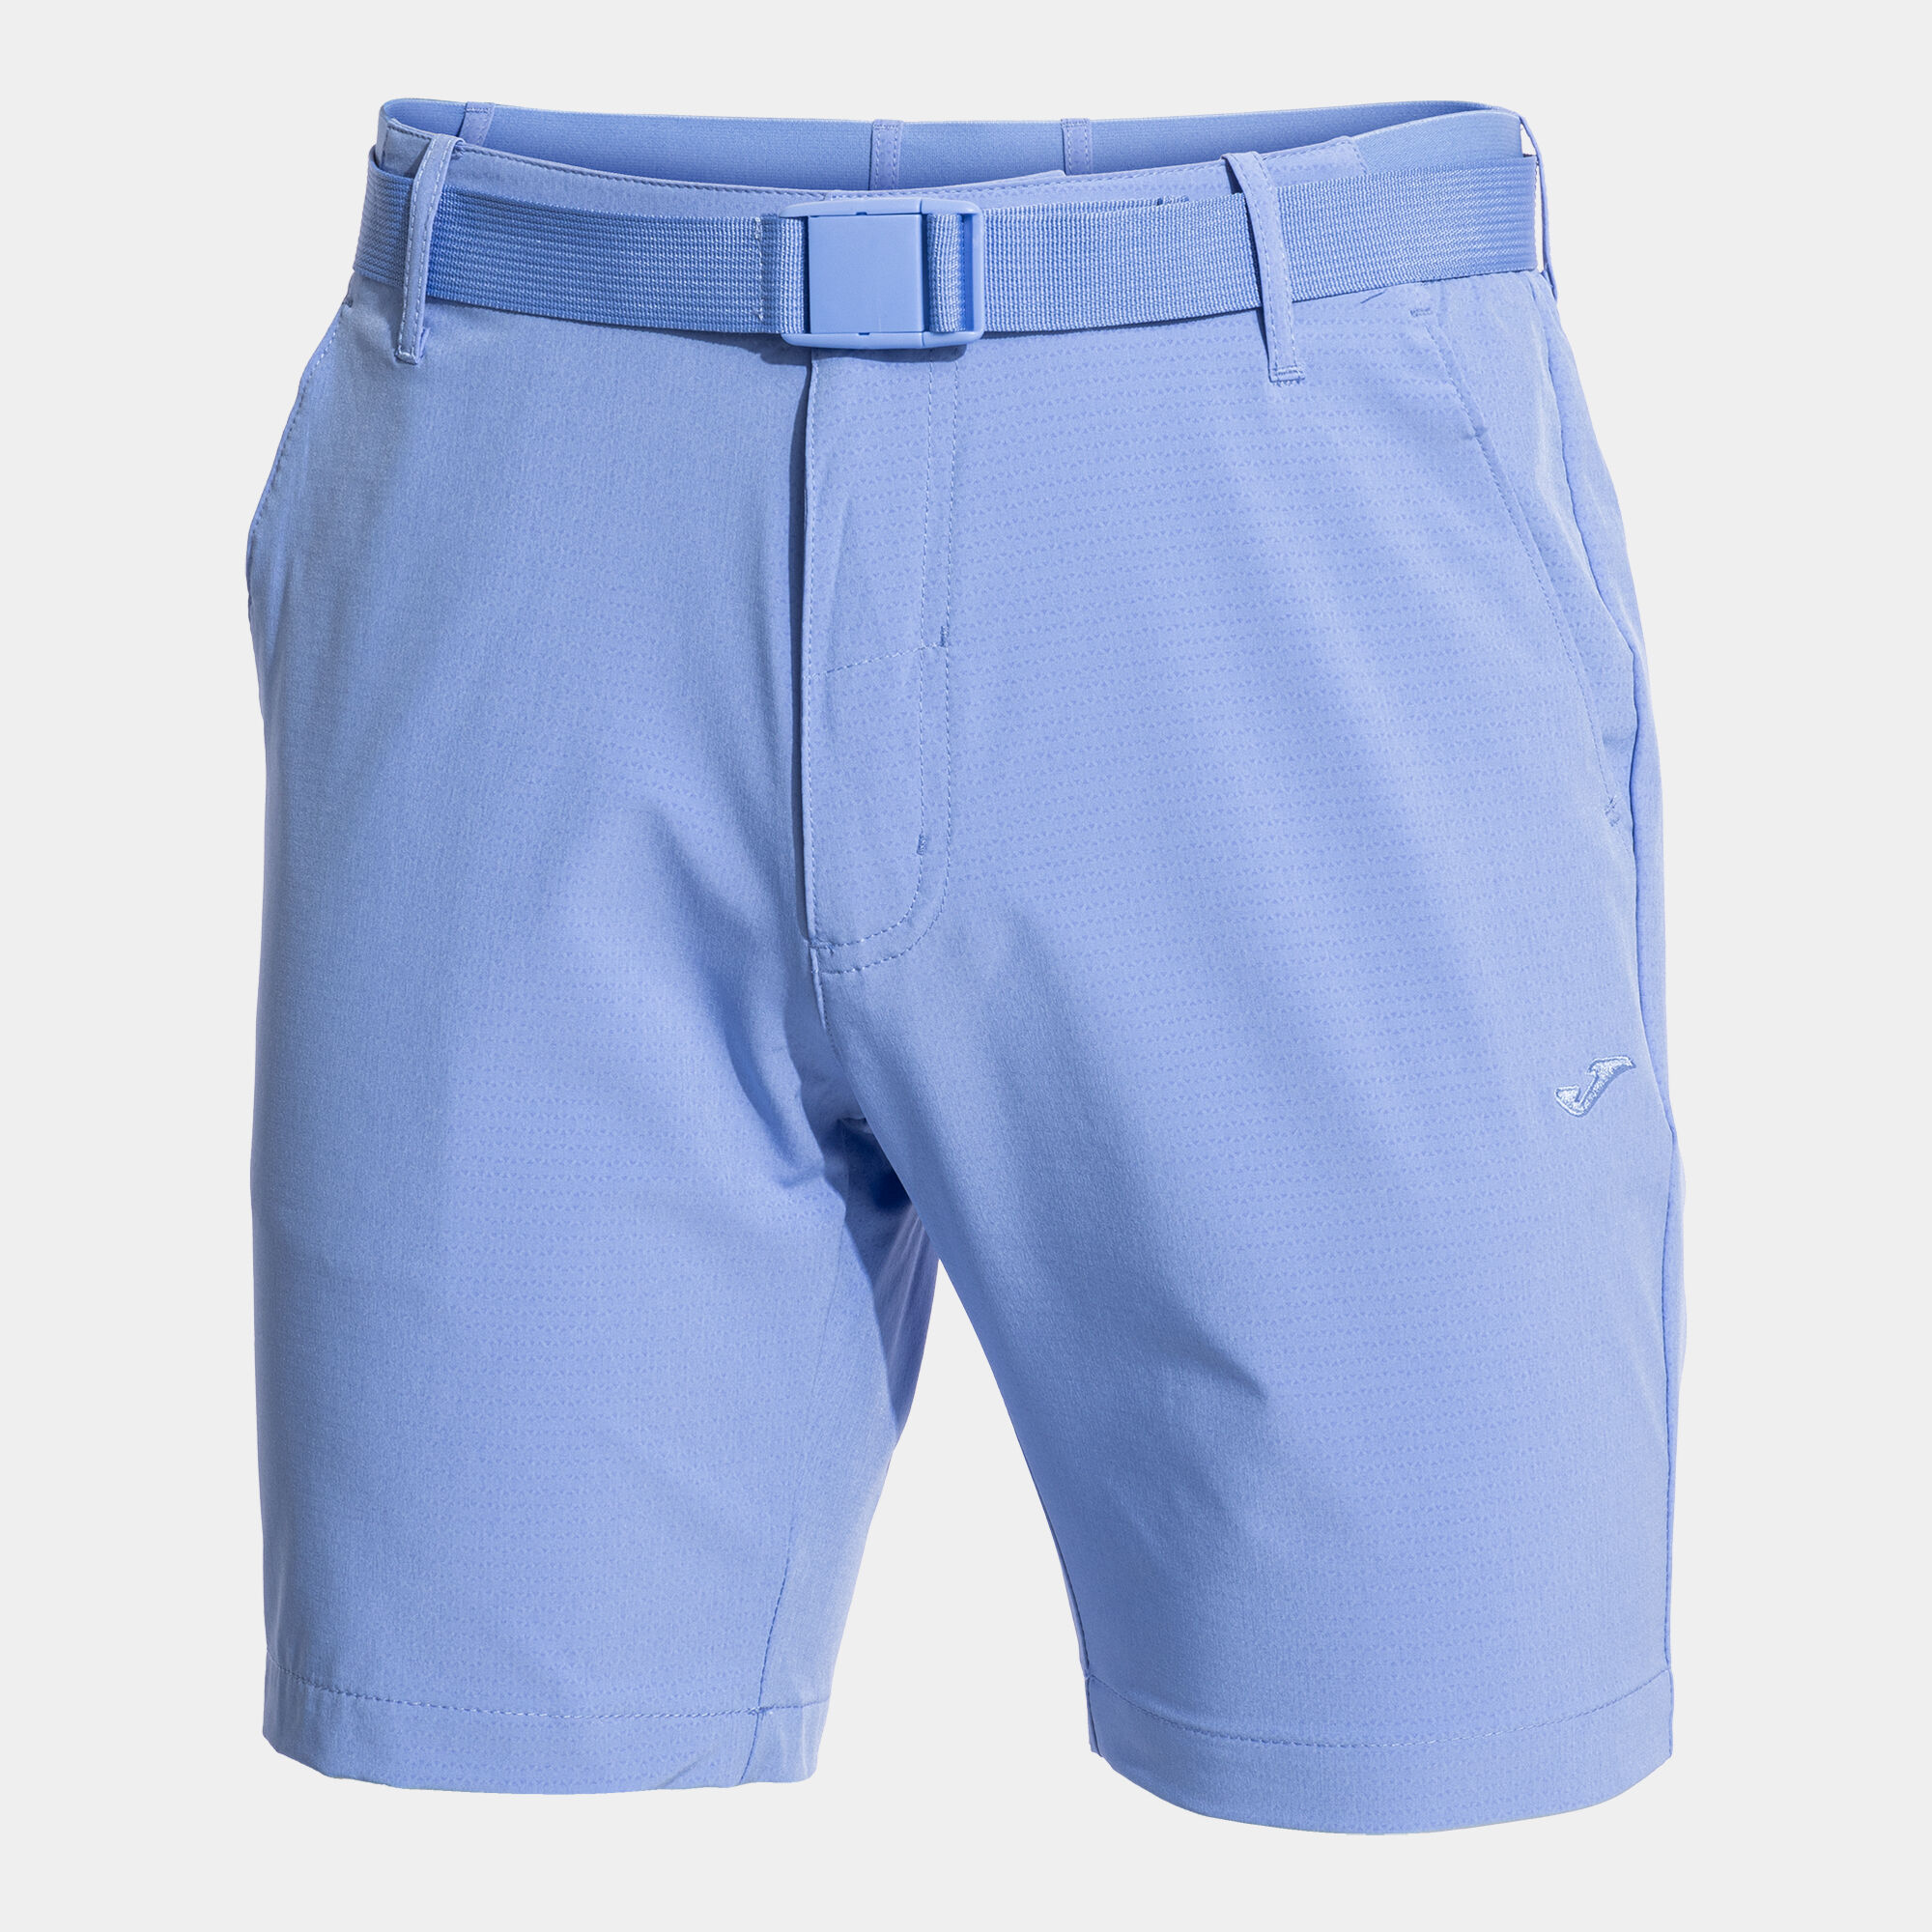 Bermuda shorts man Pasarela III blue